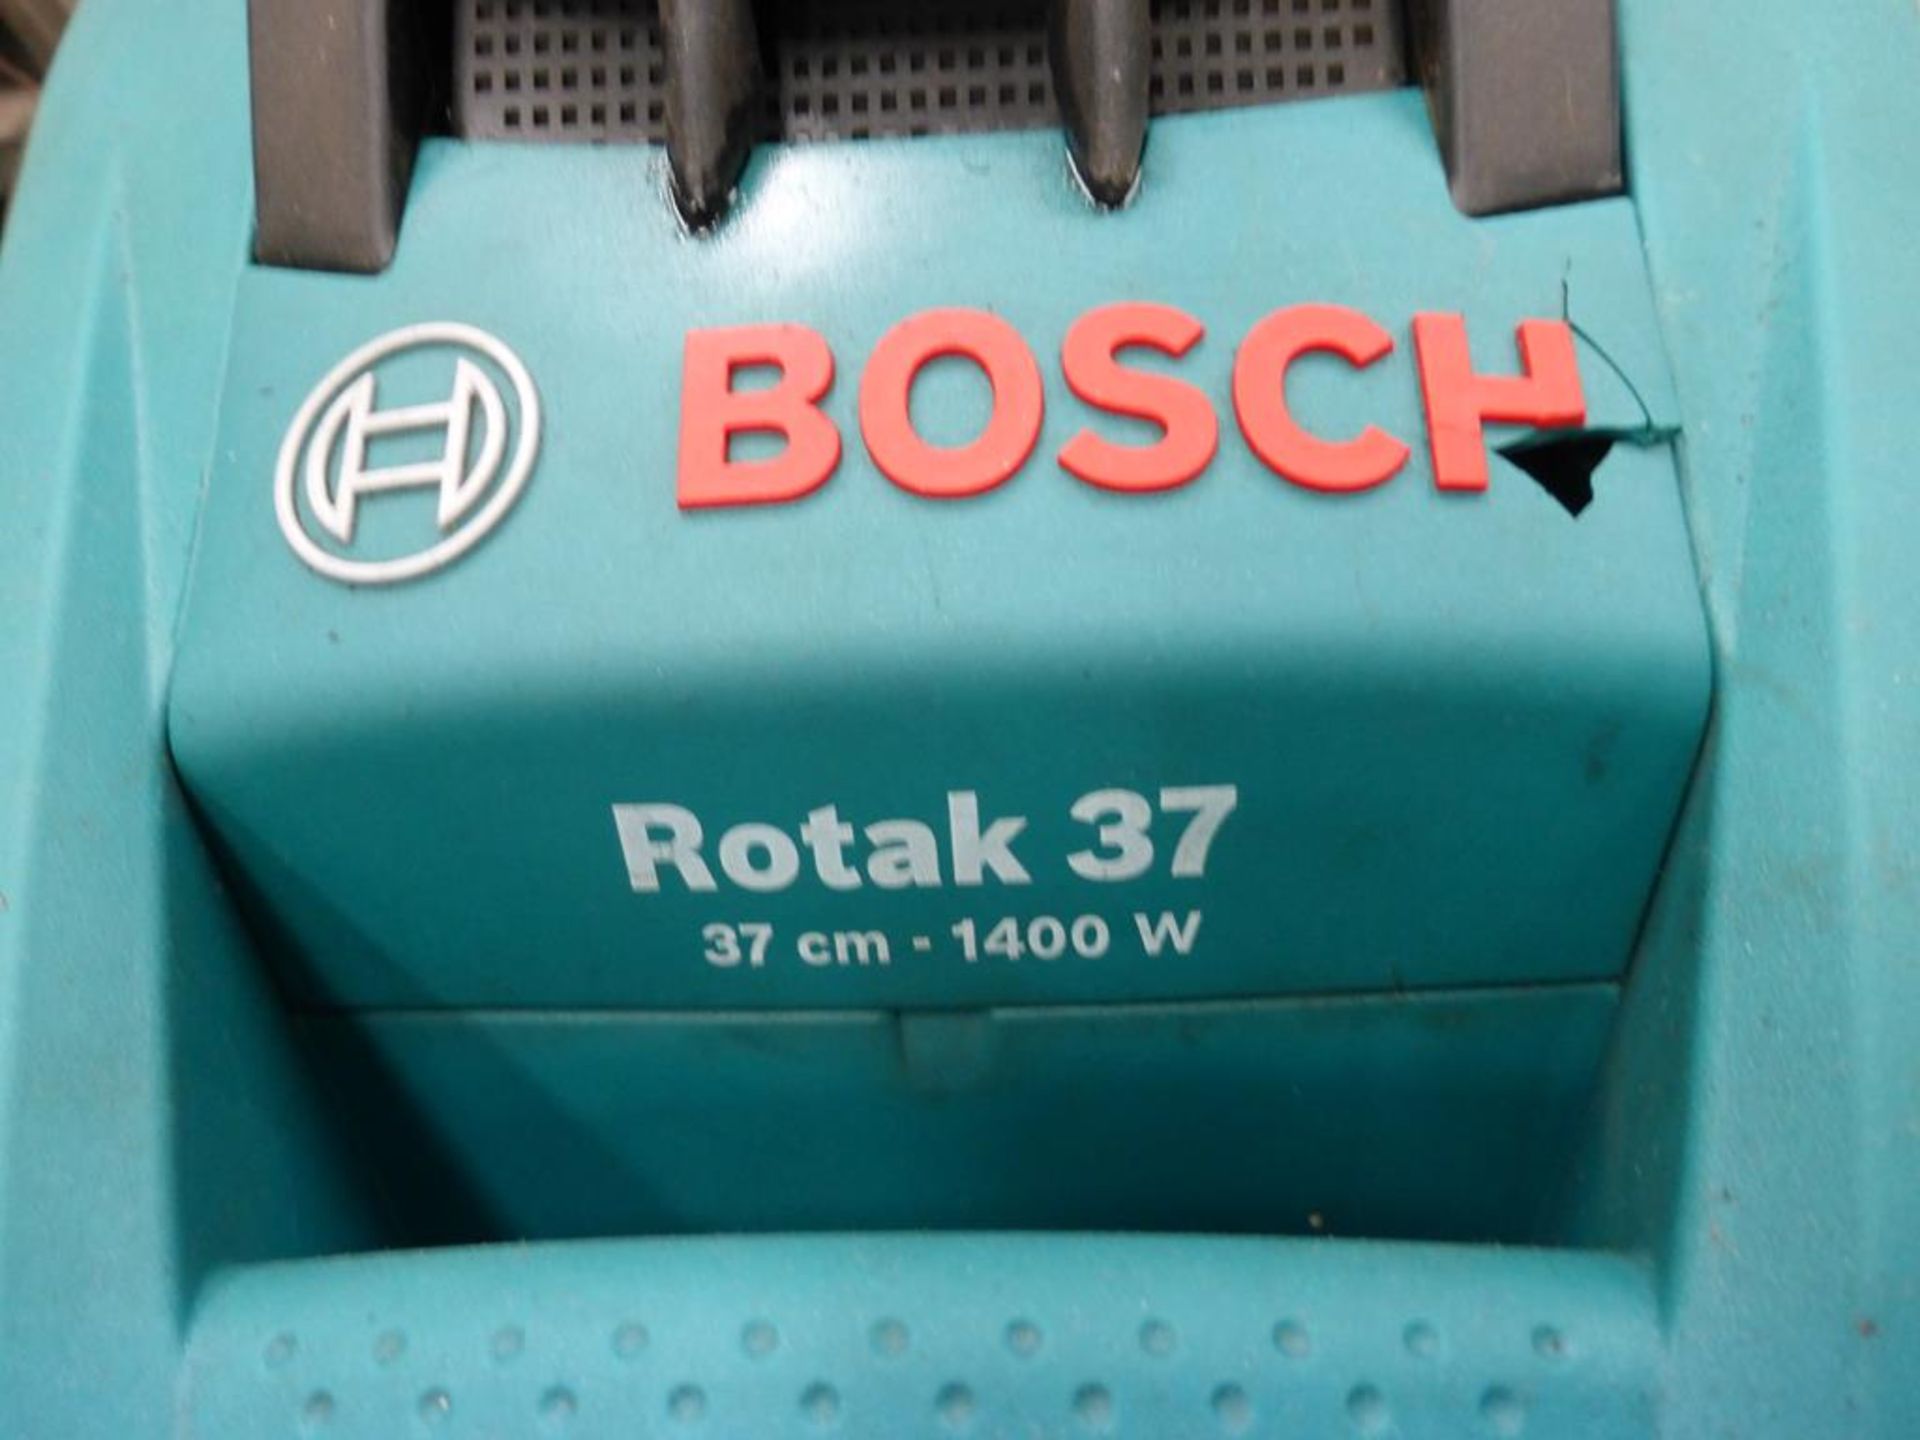 Bosch Rotak 37 Rotary Mower 16" Cut with Box (serv - Image 2 of 3